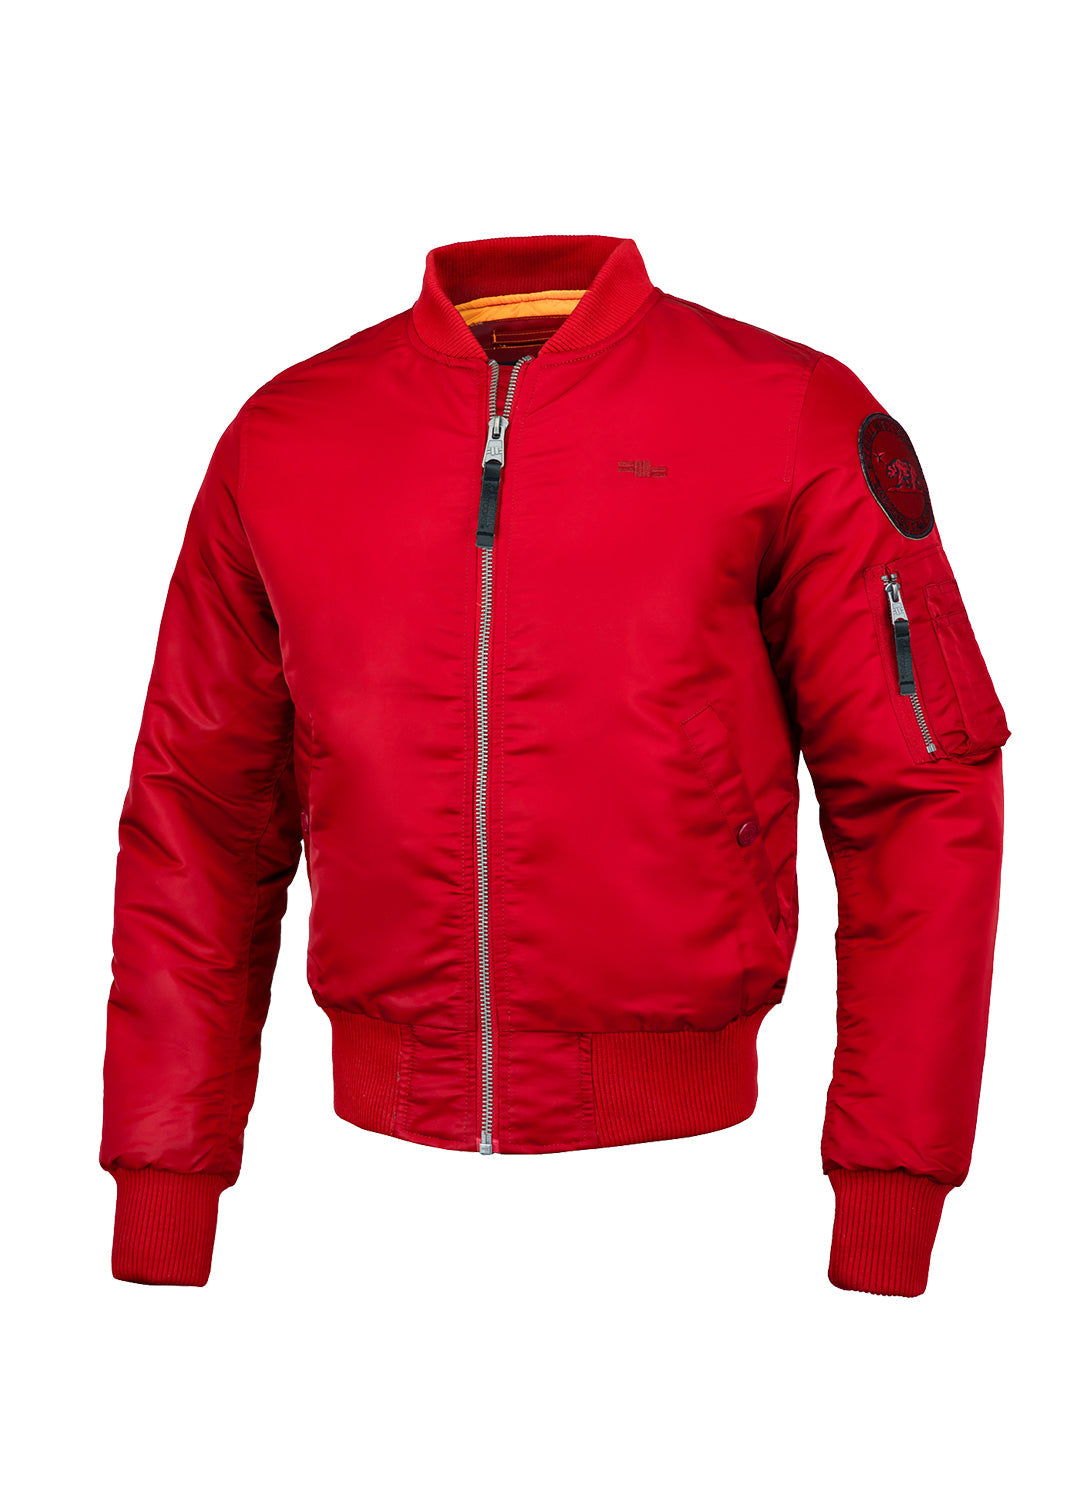 Padded Jacket MA1 Red - Pitbull West Coast International Store 